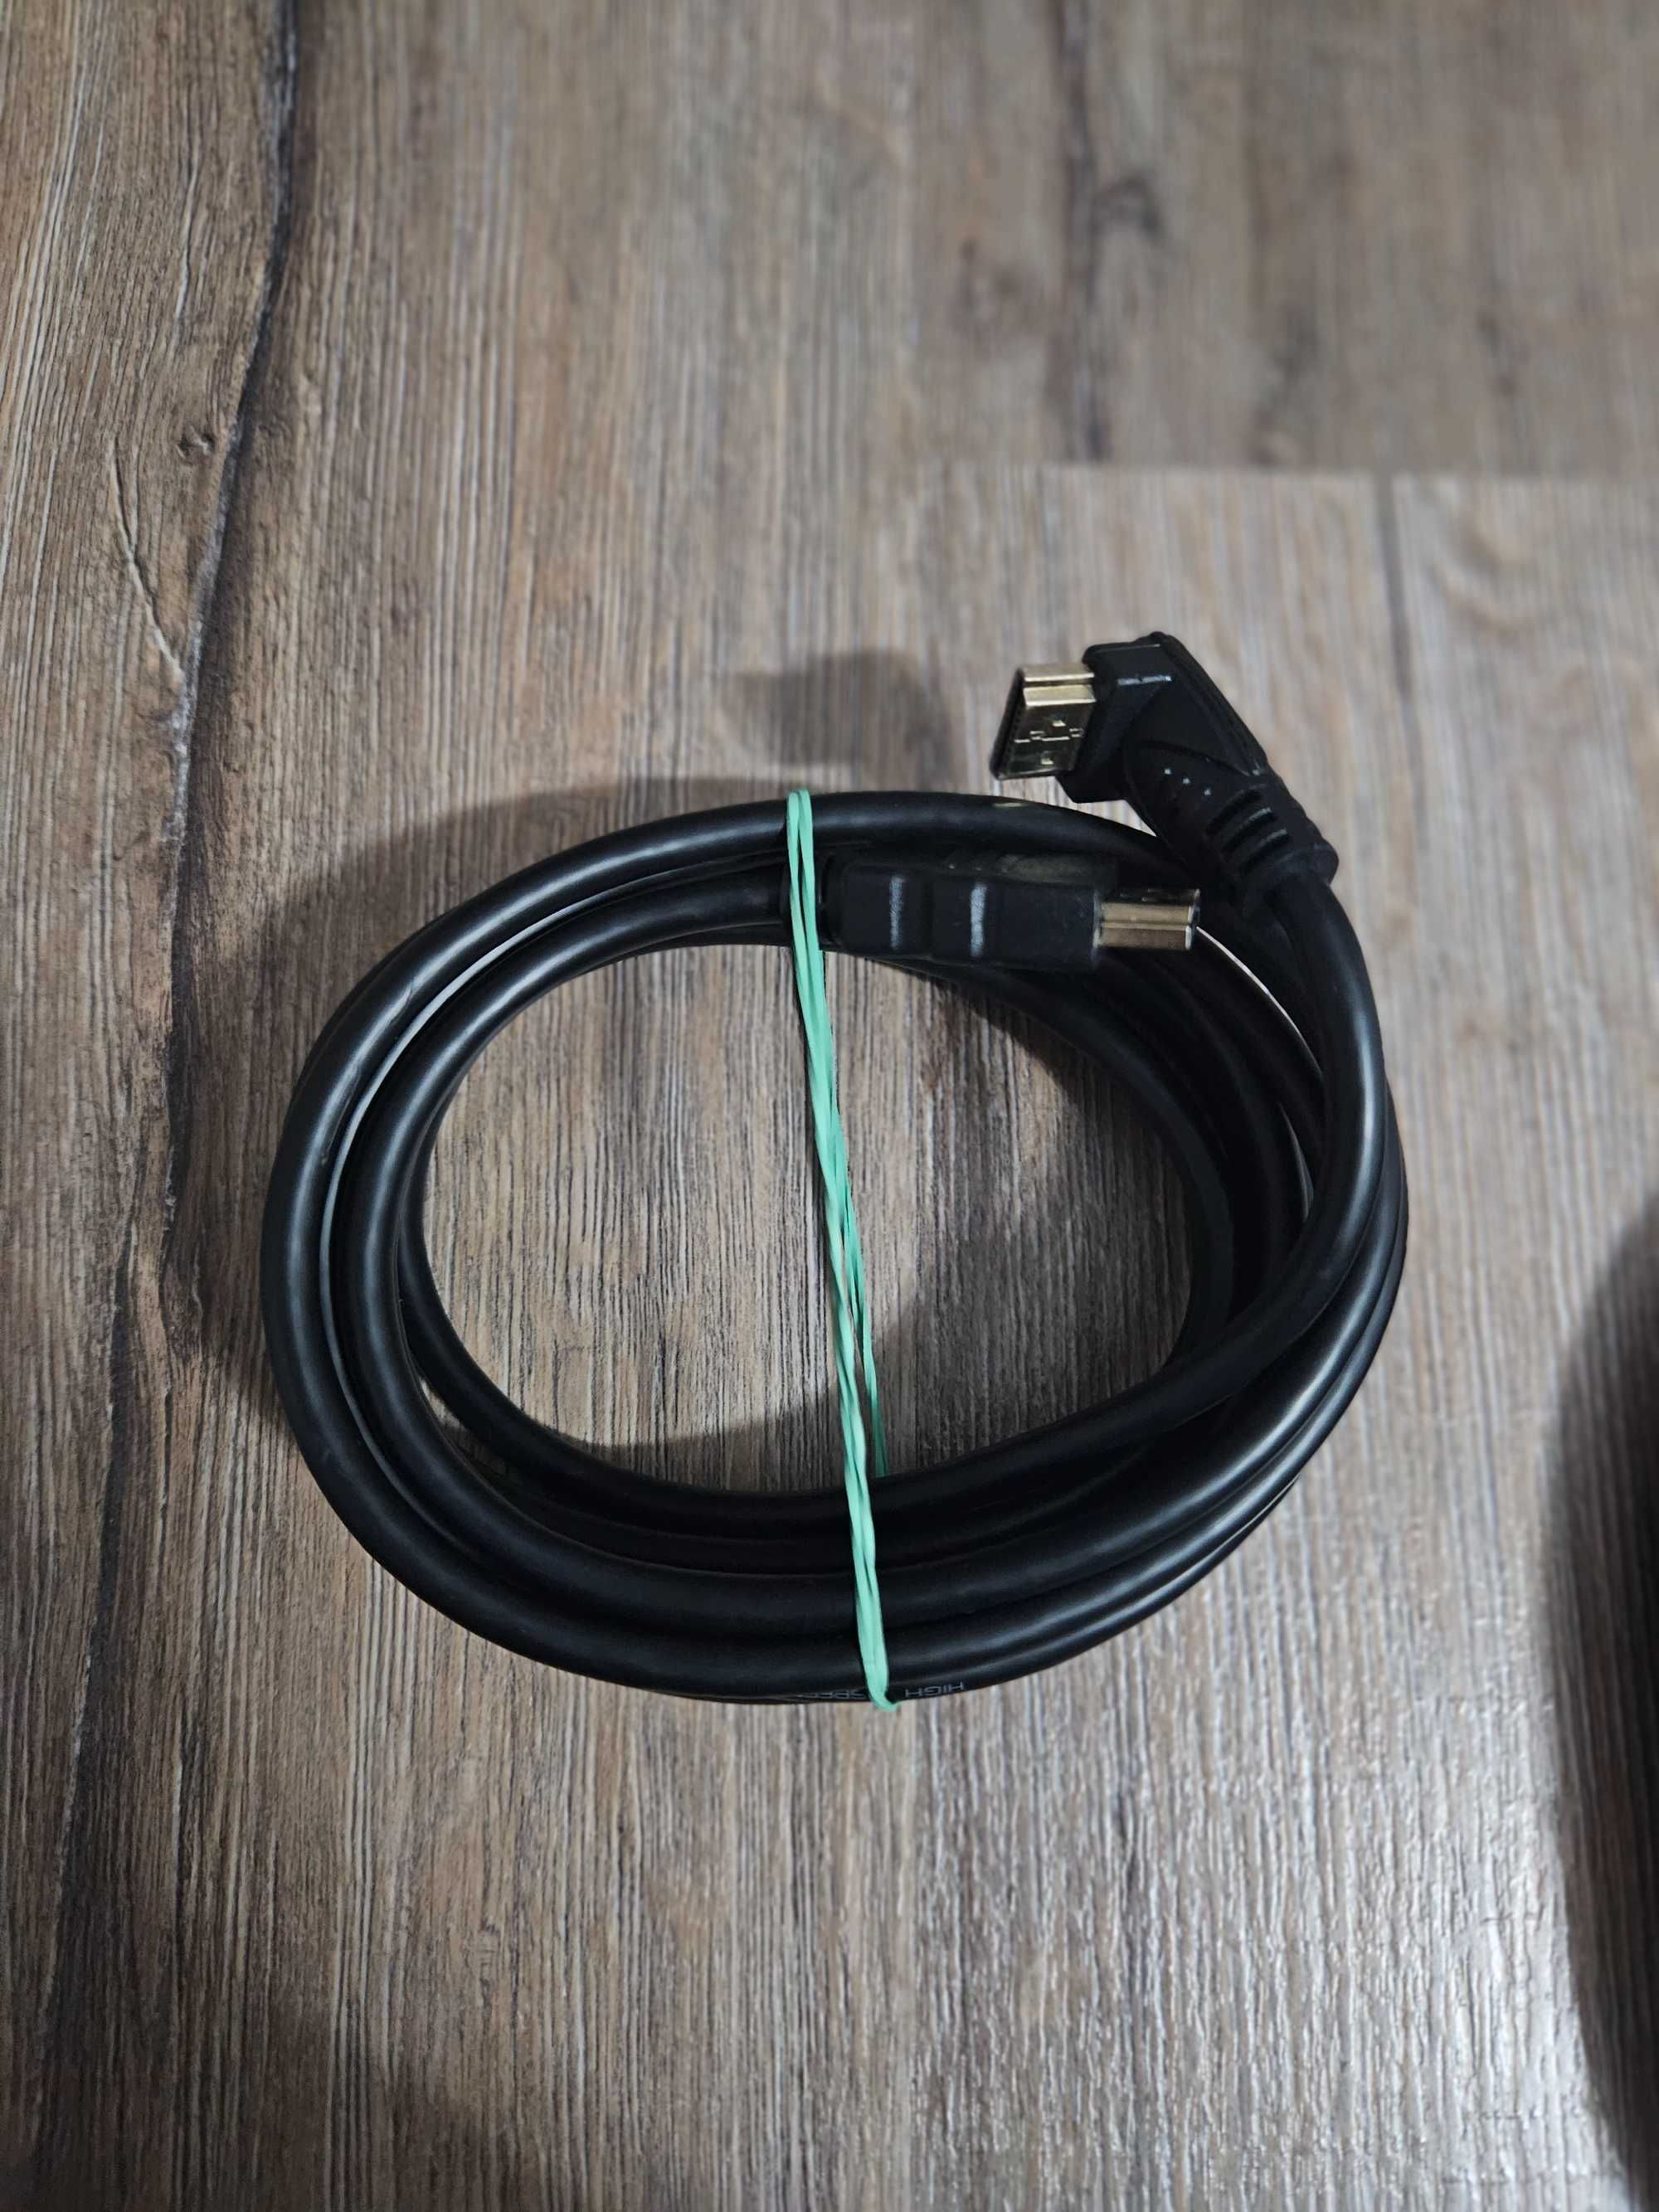 Cabluri HDMI lung lungime 5 metri, 3 metri, 215 cm